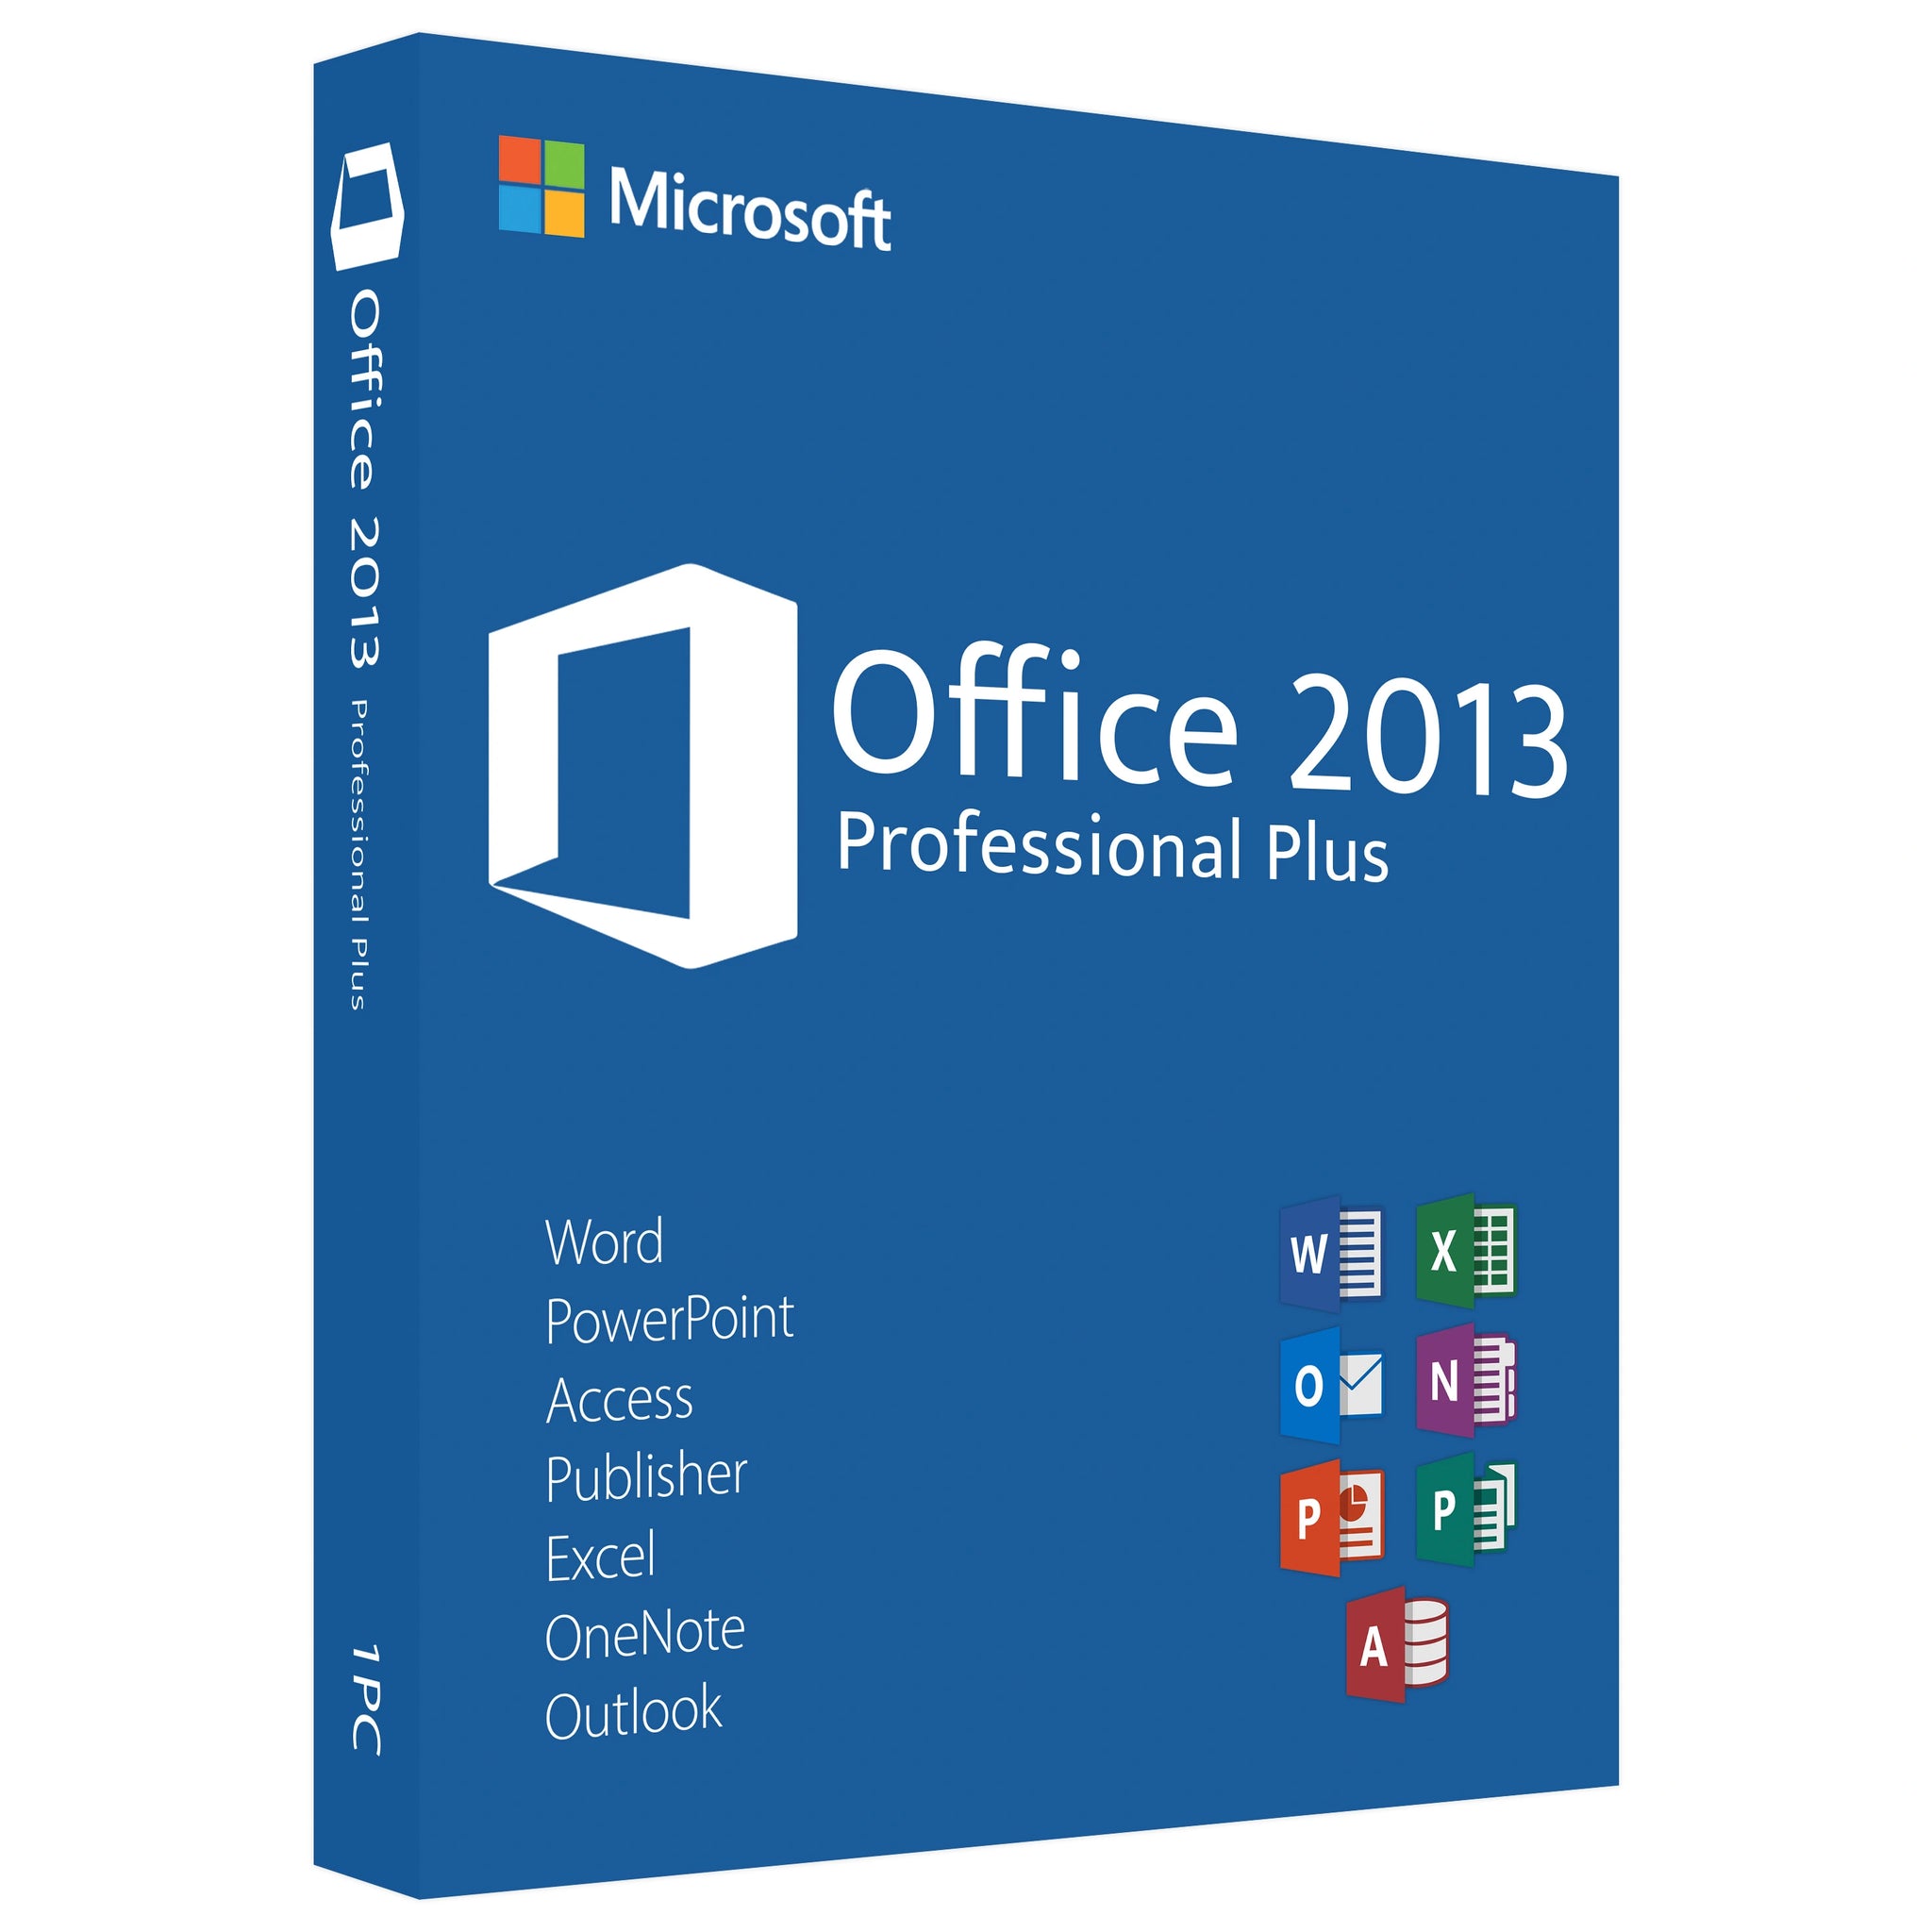 Microsoft Office 2013 Professional Plus - Lifetime License Key for 1 PC